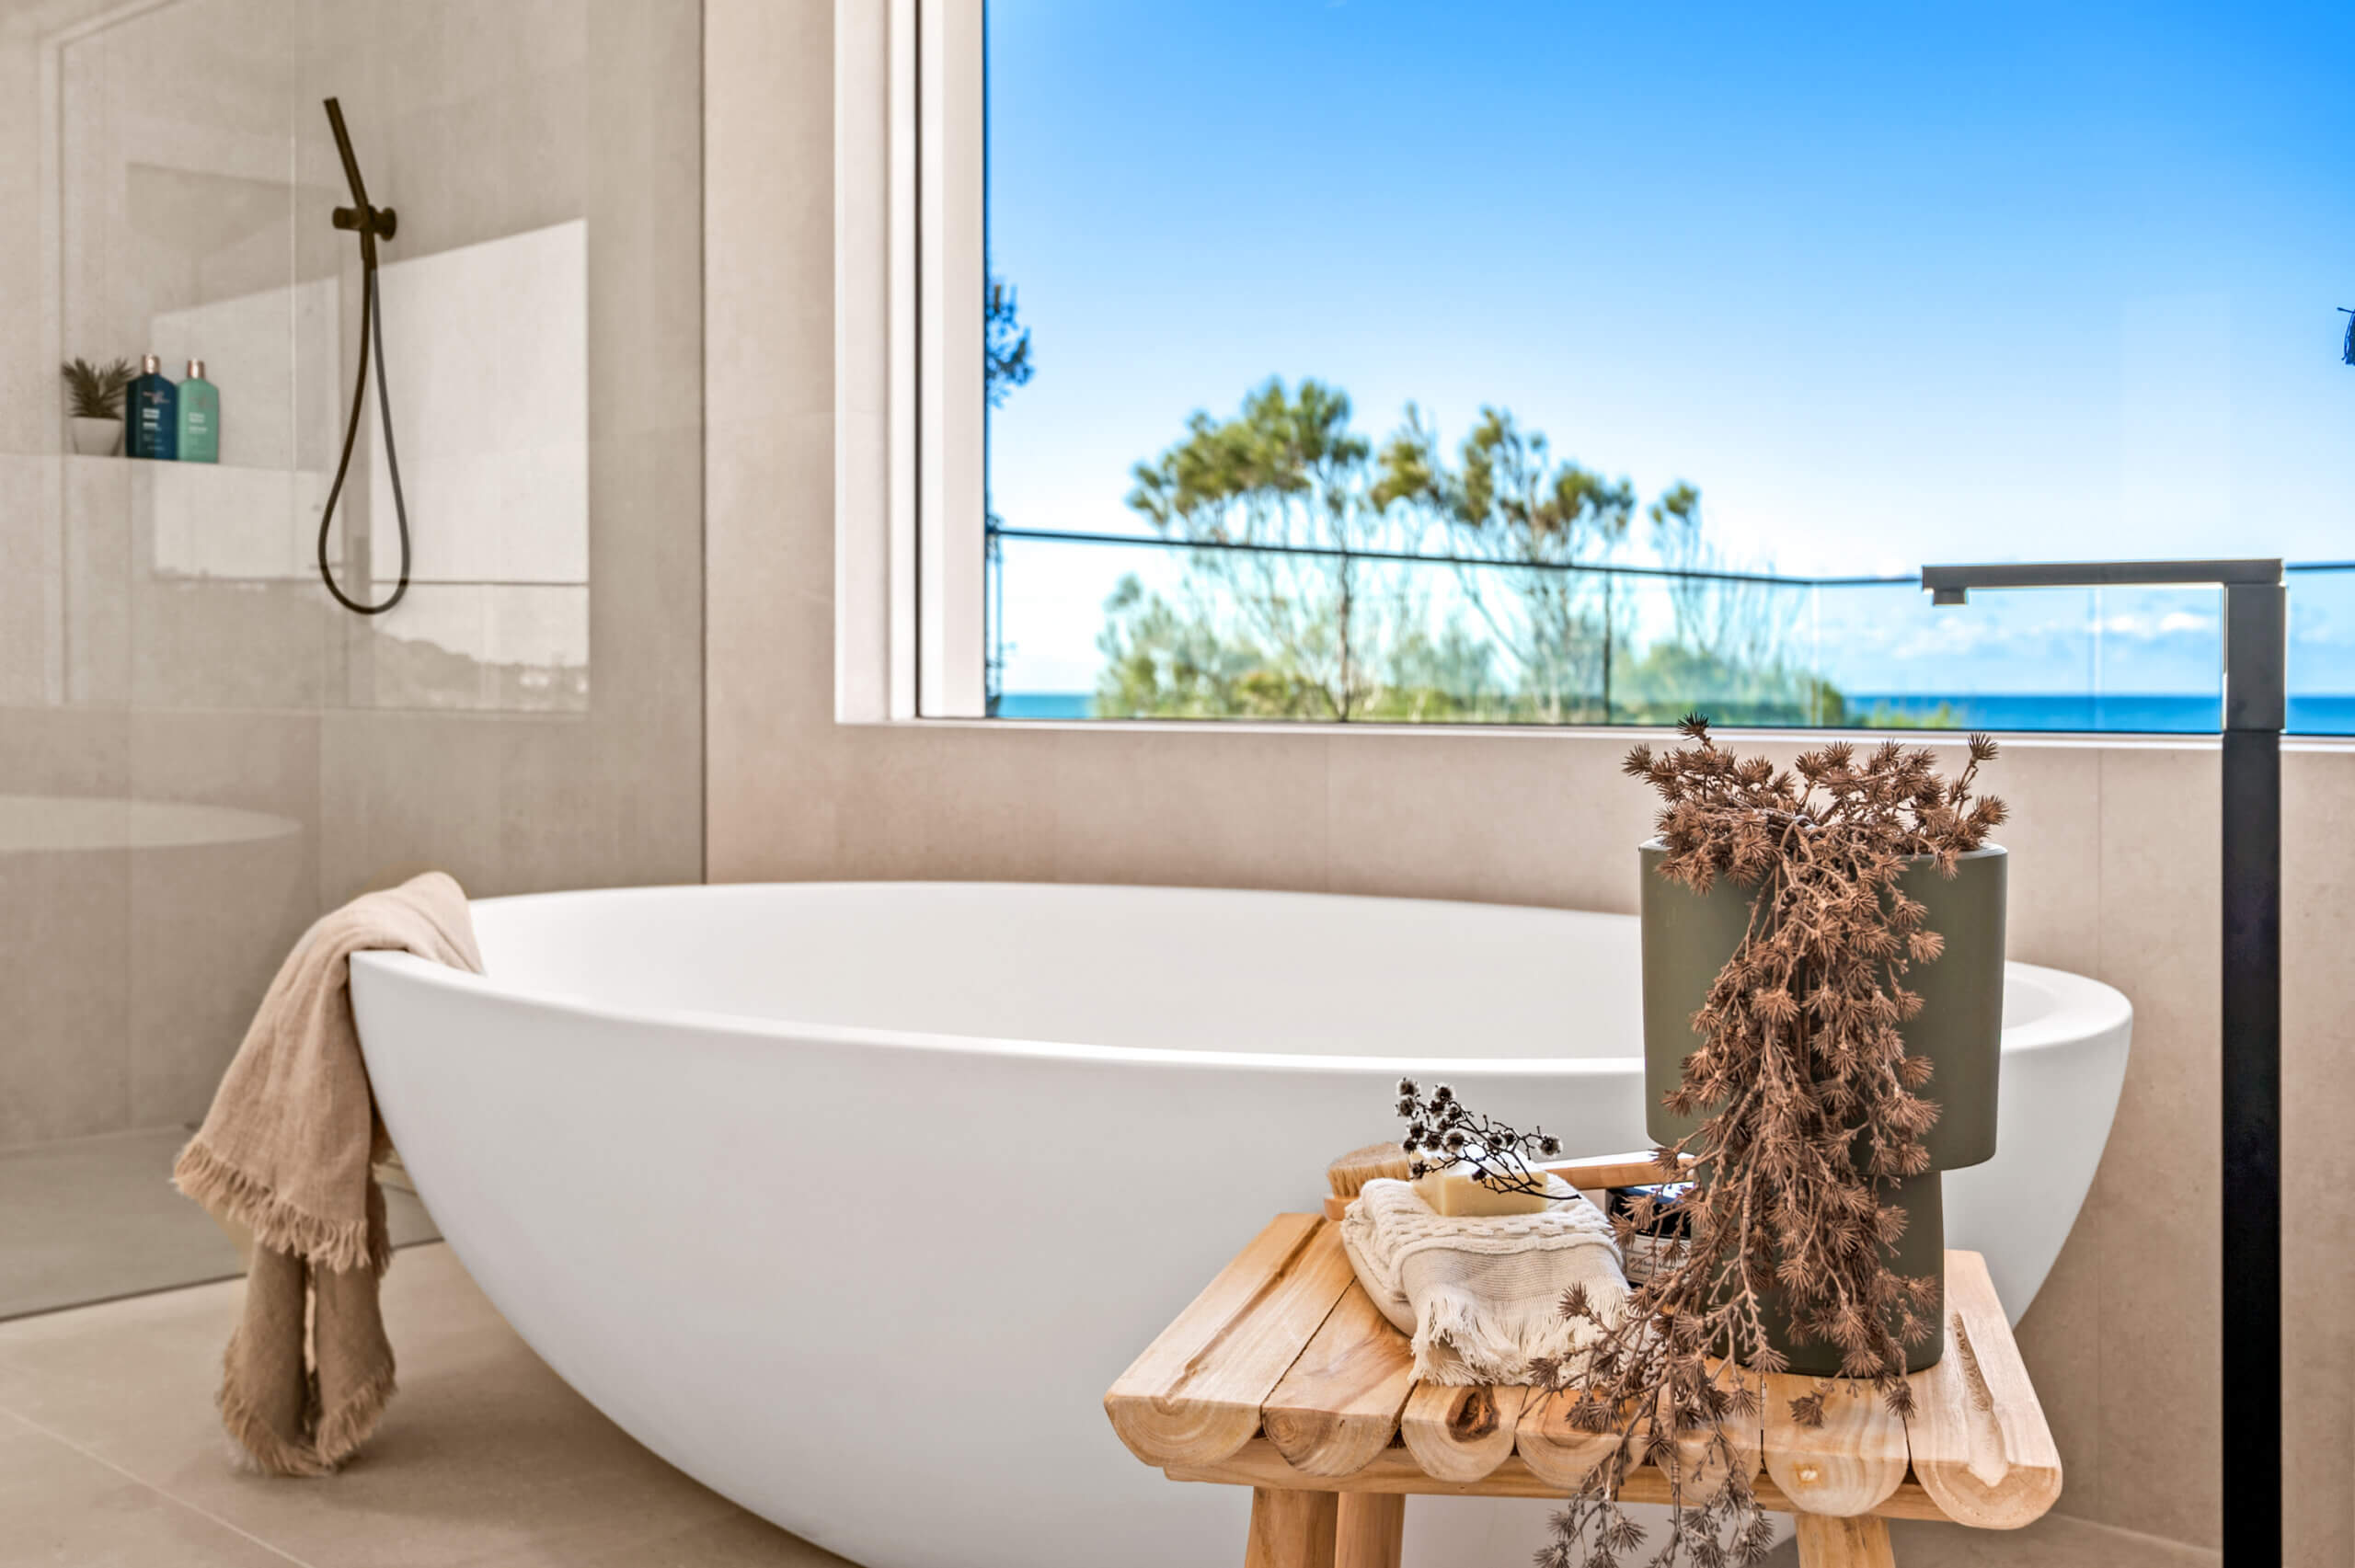 5 Expert Design Tips For Your Bathroom Renovation